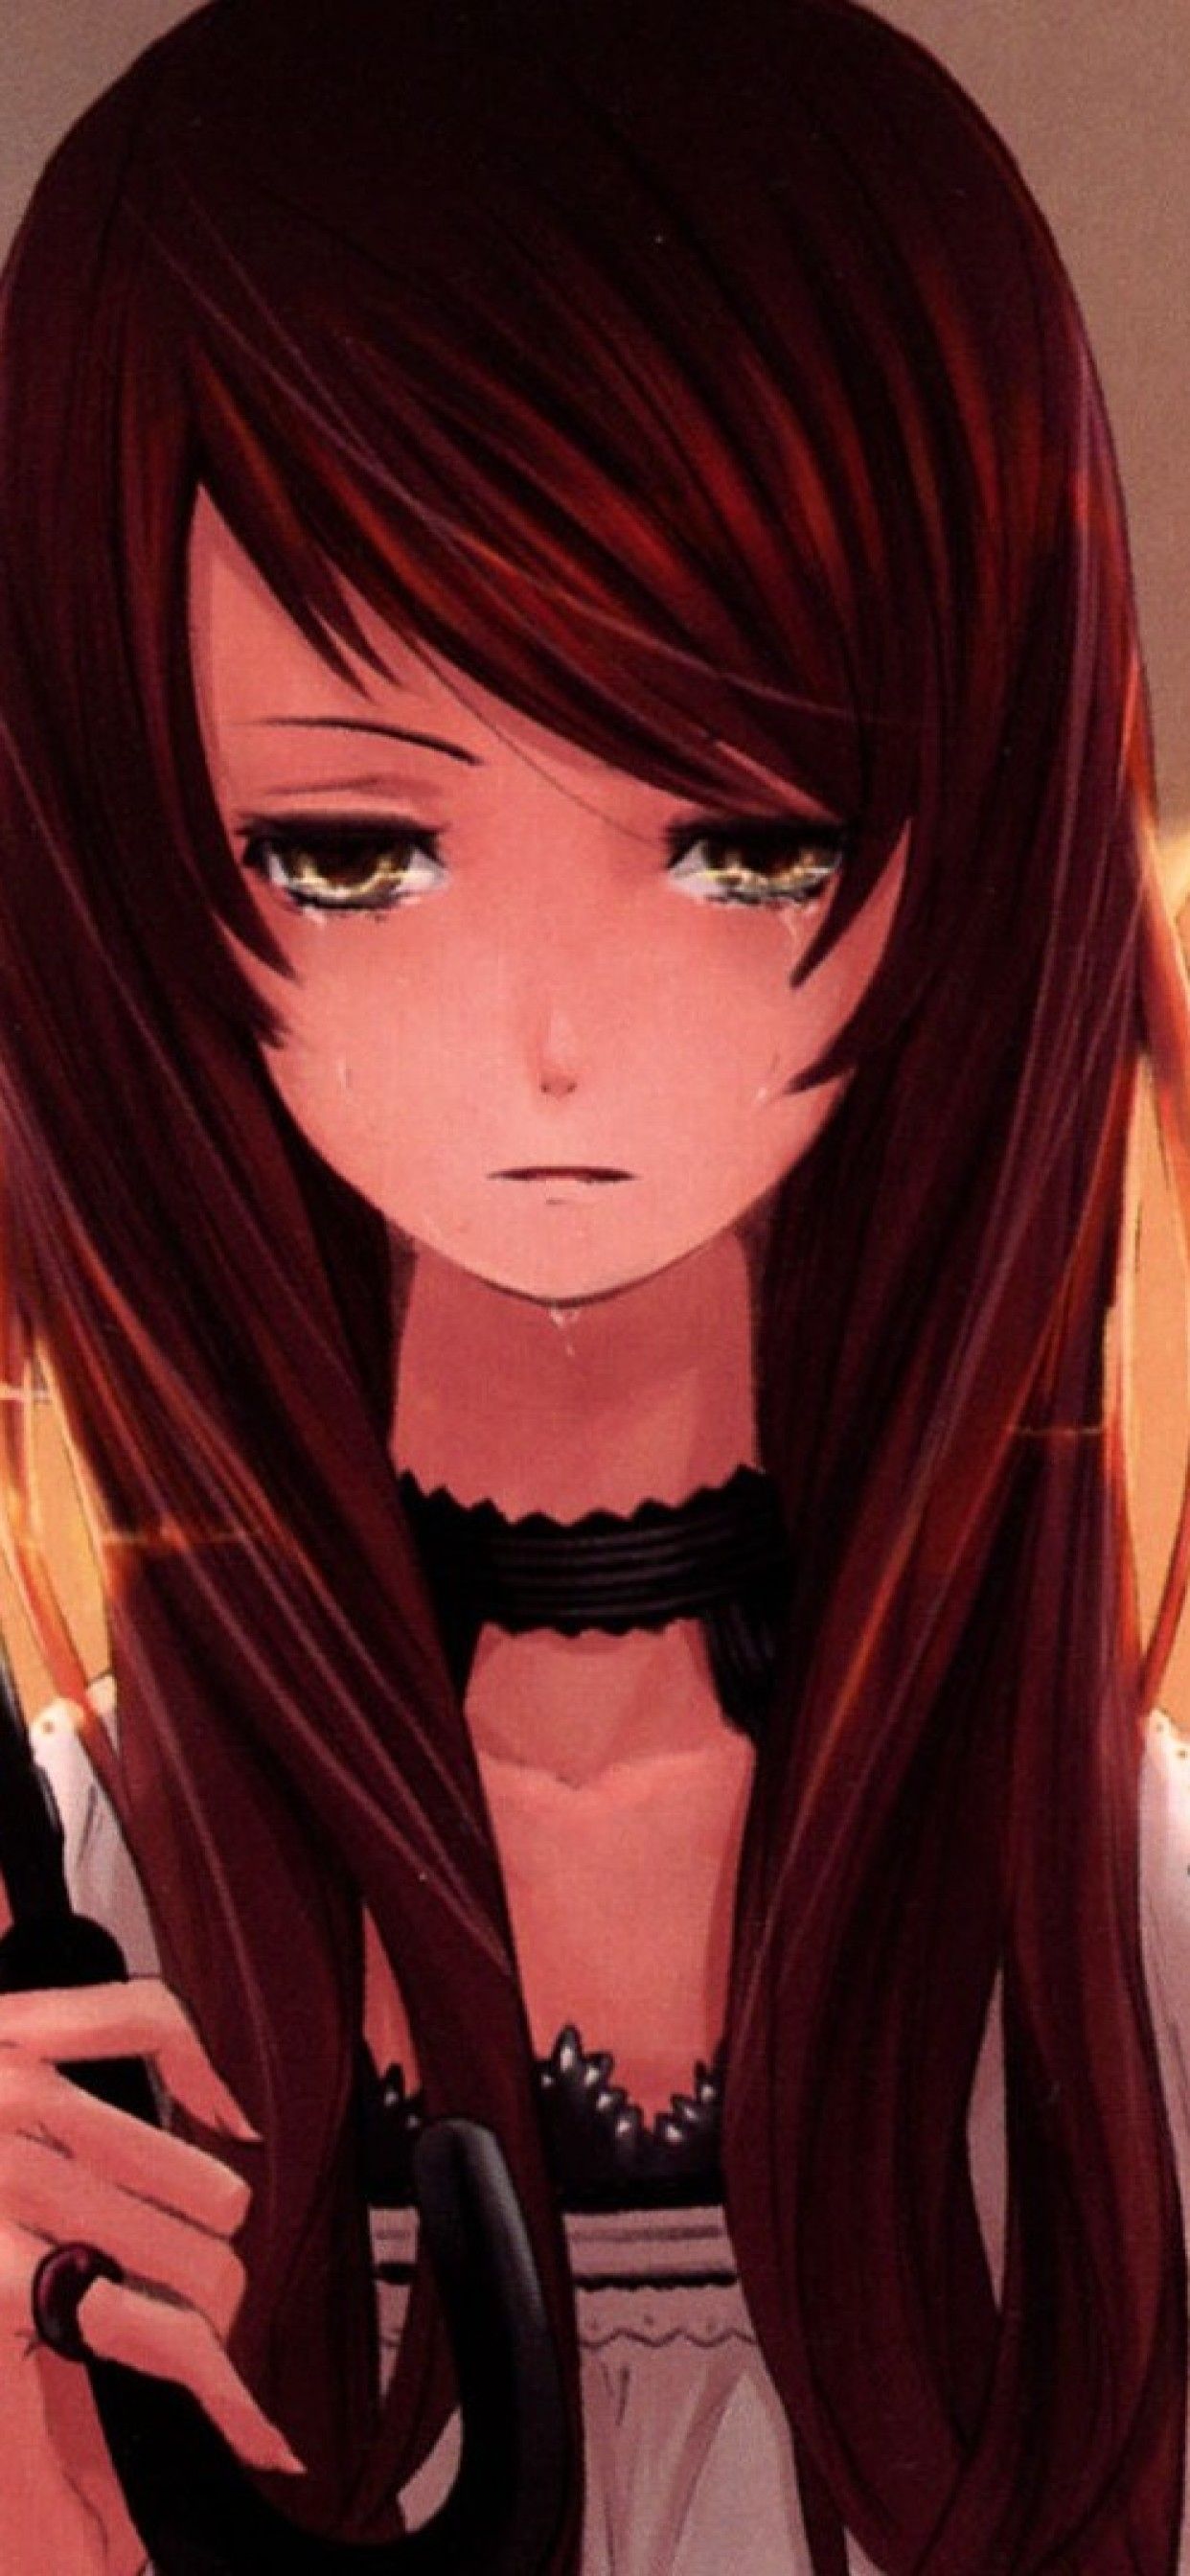 Sad Anime Girl iPhone XS MAX HD 4k Wallpaper, Image